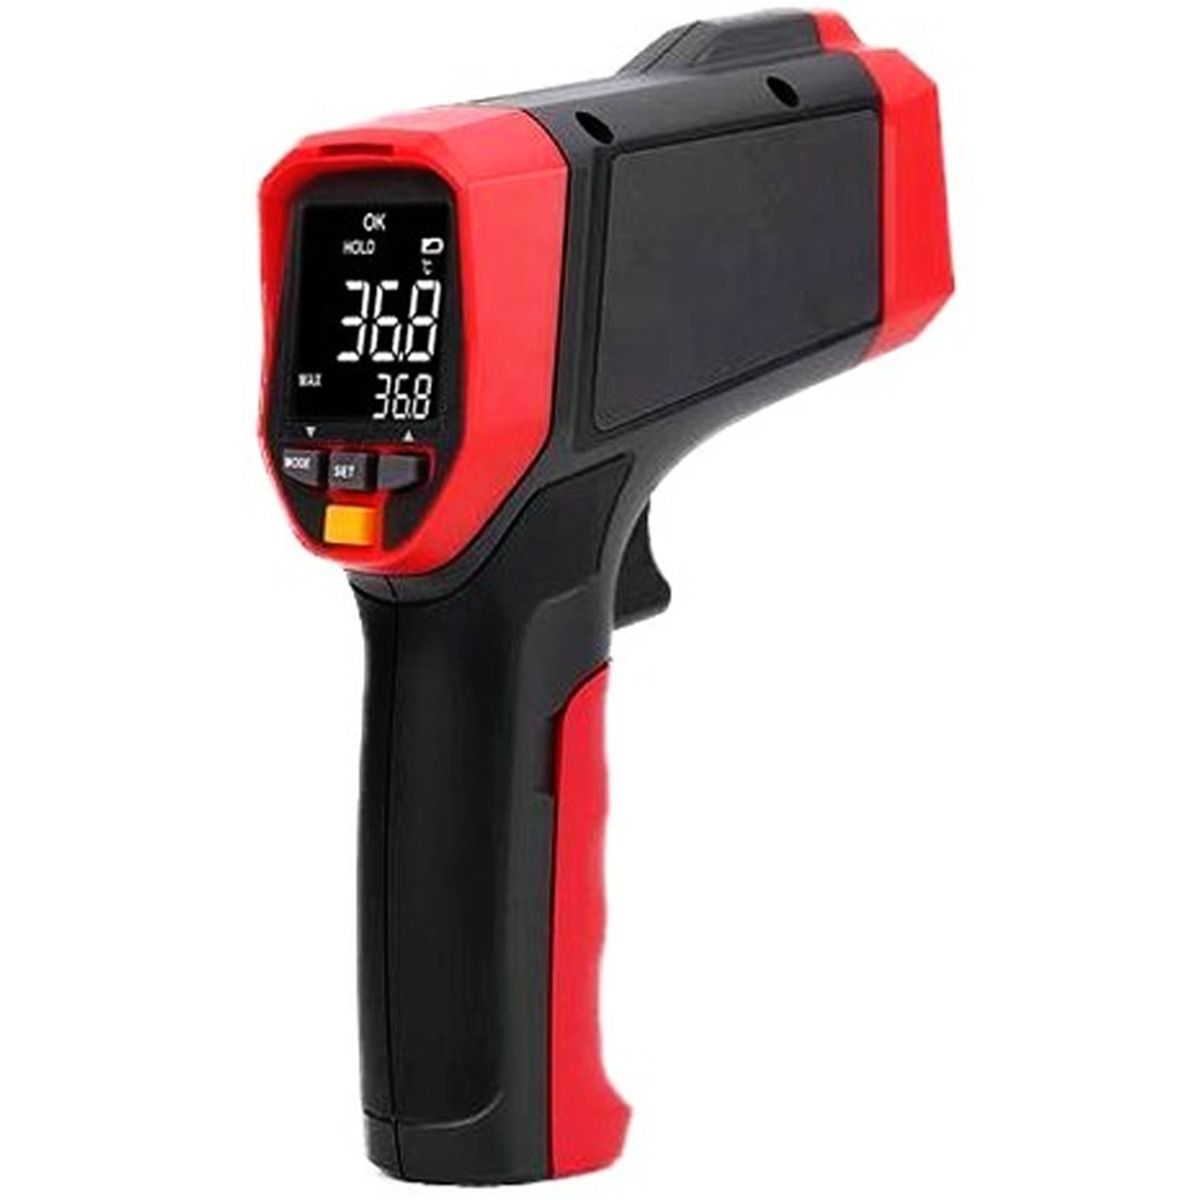 Buy Global Digital Infrared Thermometer (UNI-T UT 308H) Online